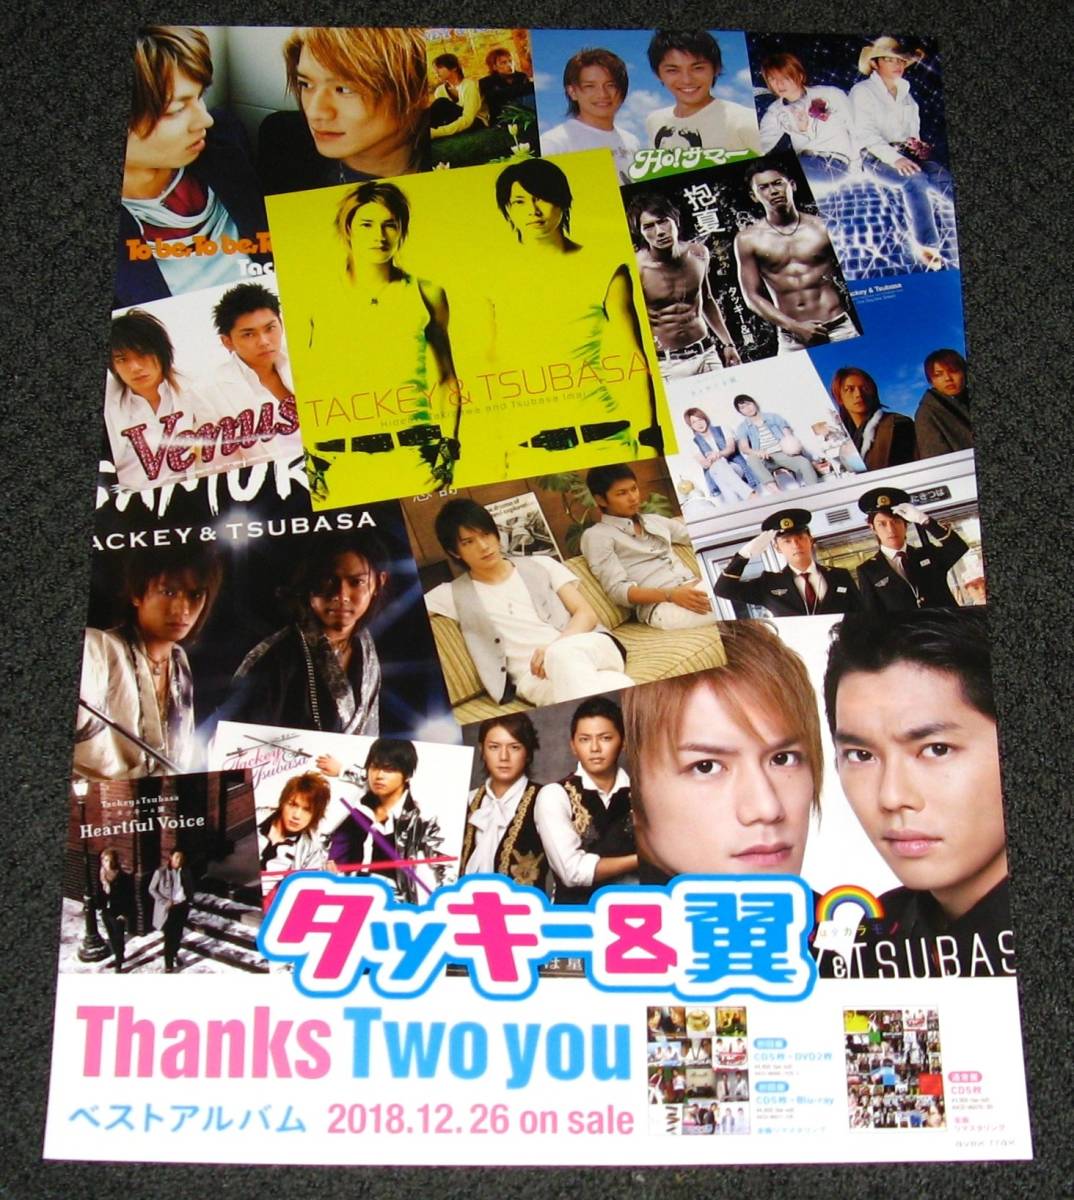  Tackey & крыло [Thanks Two you] уведомление постер Takizawa Hideaki Imai Tsubasa 